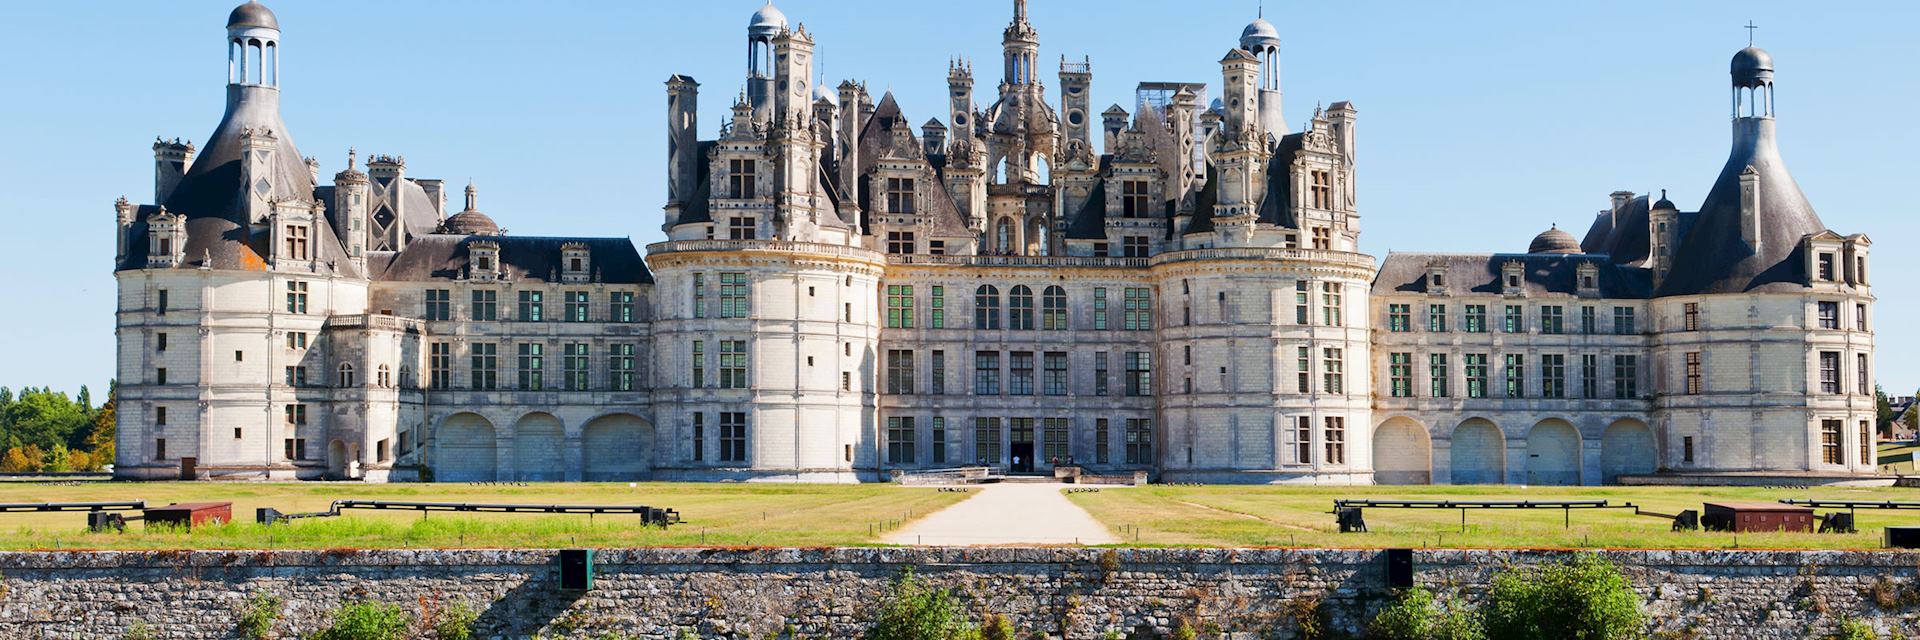 Chateau Chambord a Renaissance Castle in the Loire Valley